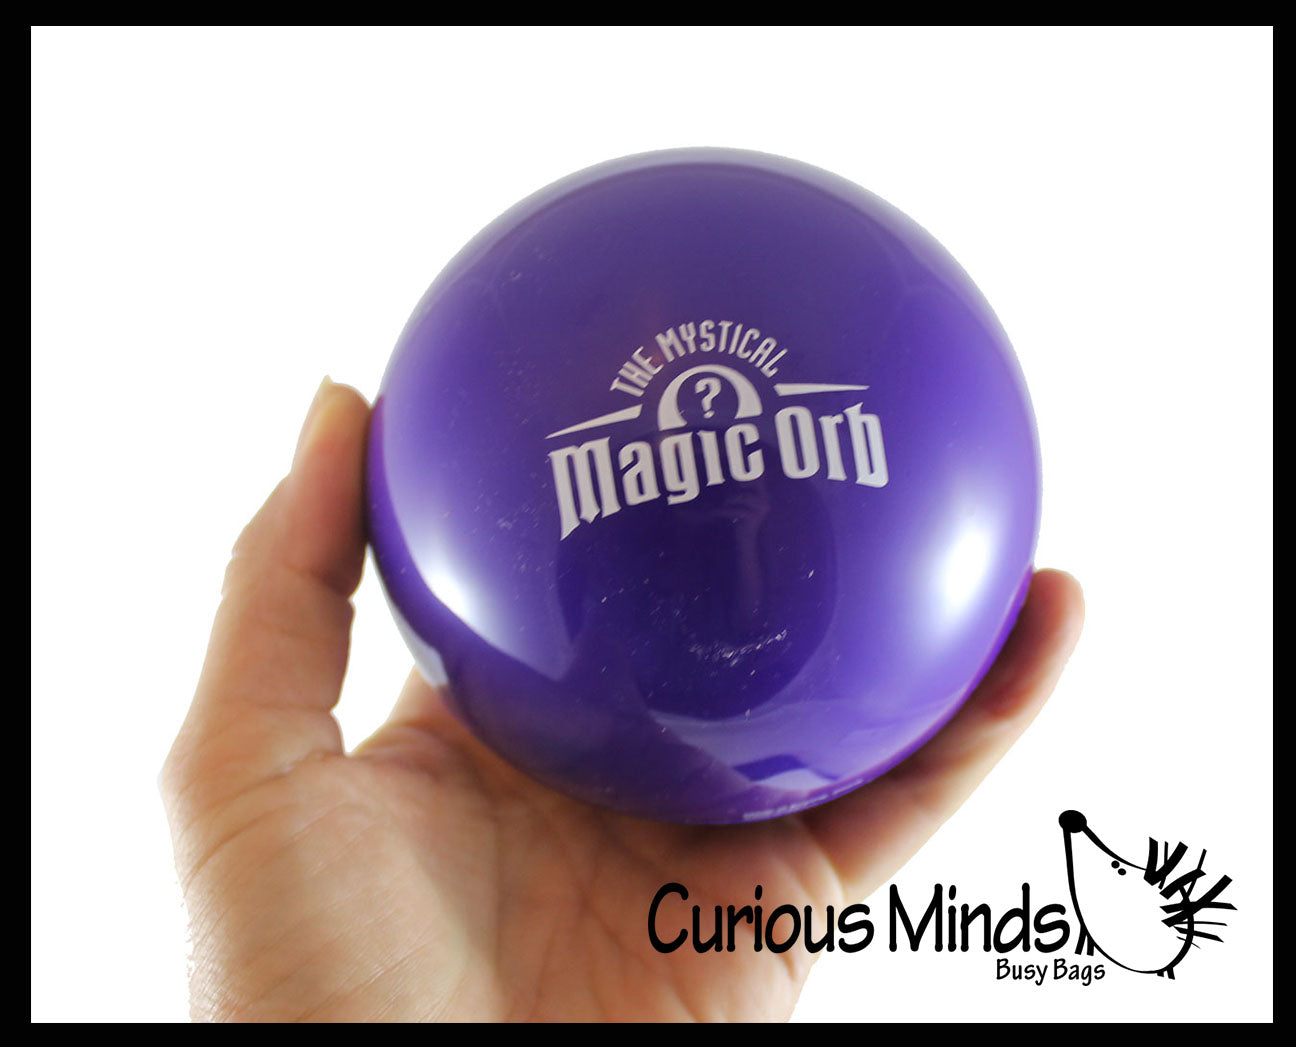 Magic 8 Ball Gives (Bad) Tech Advice 